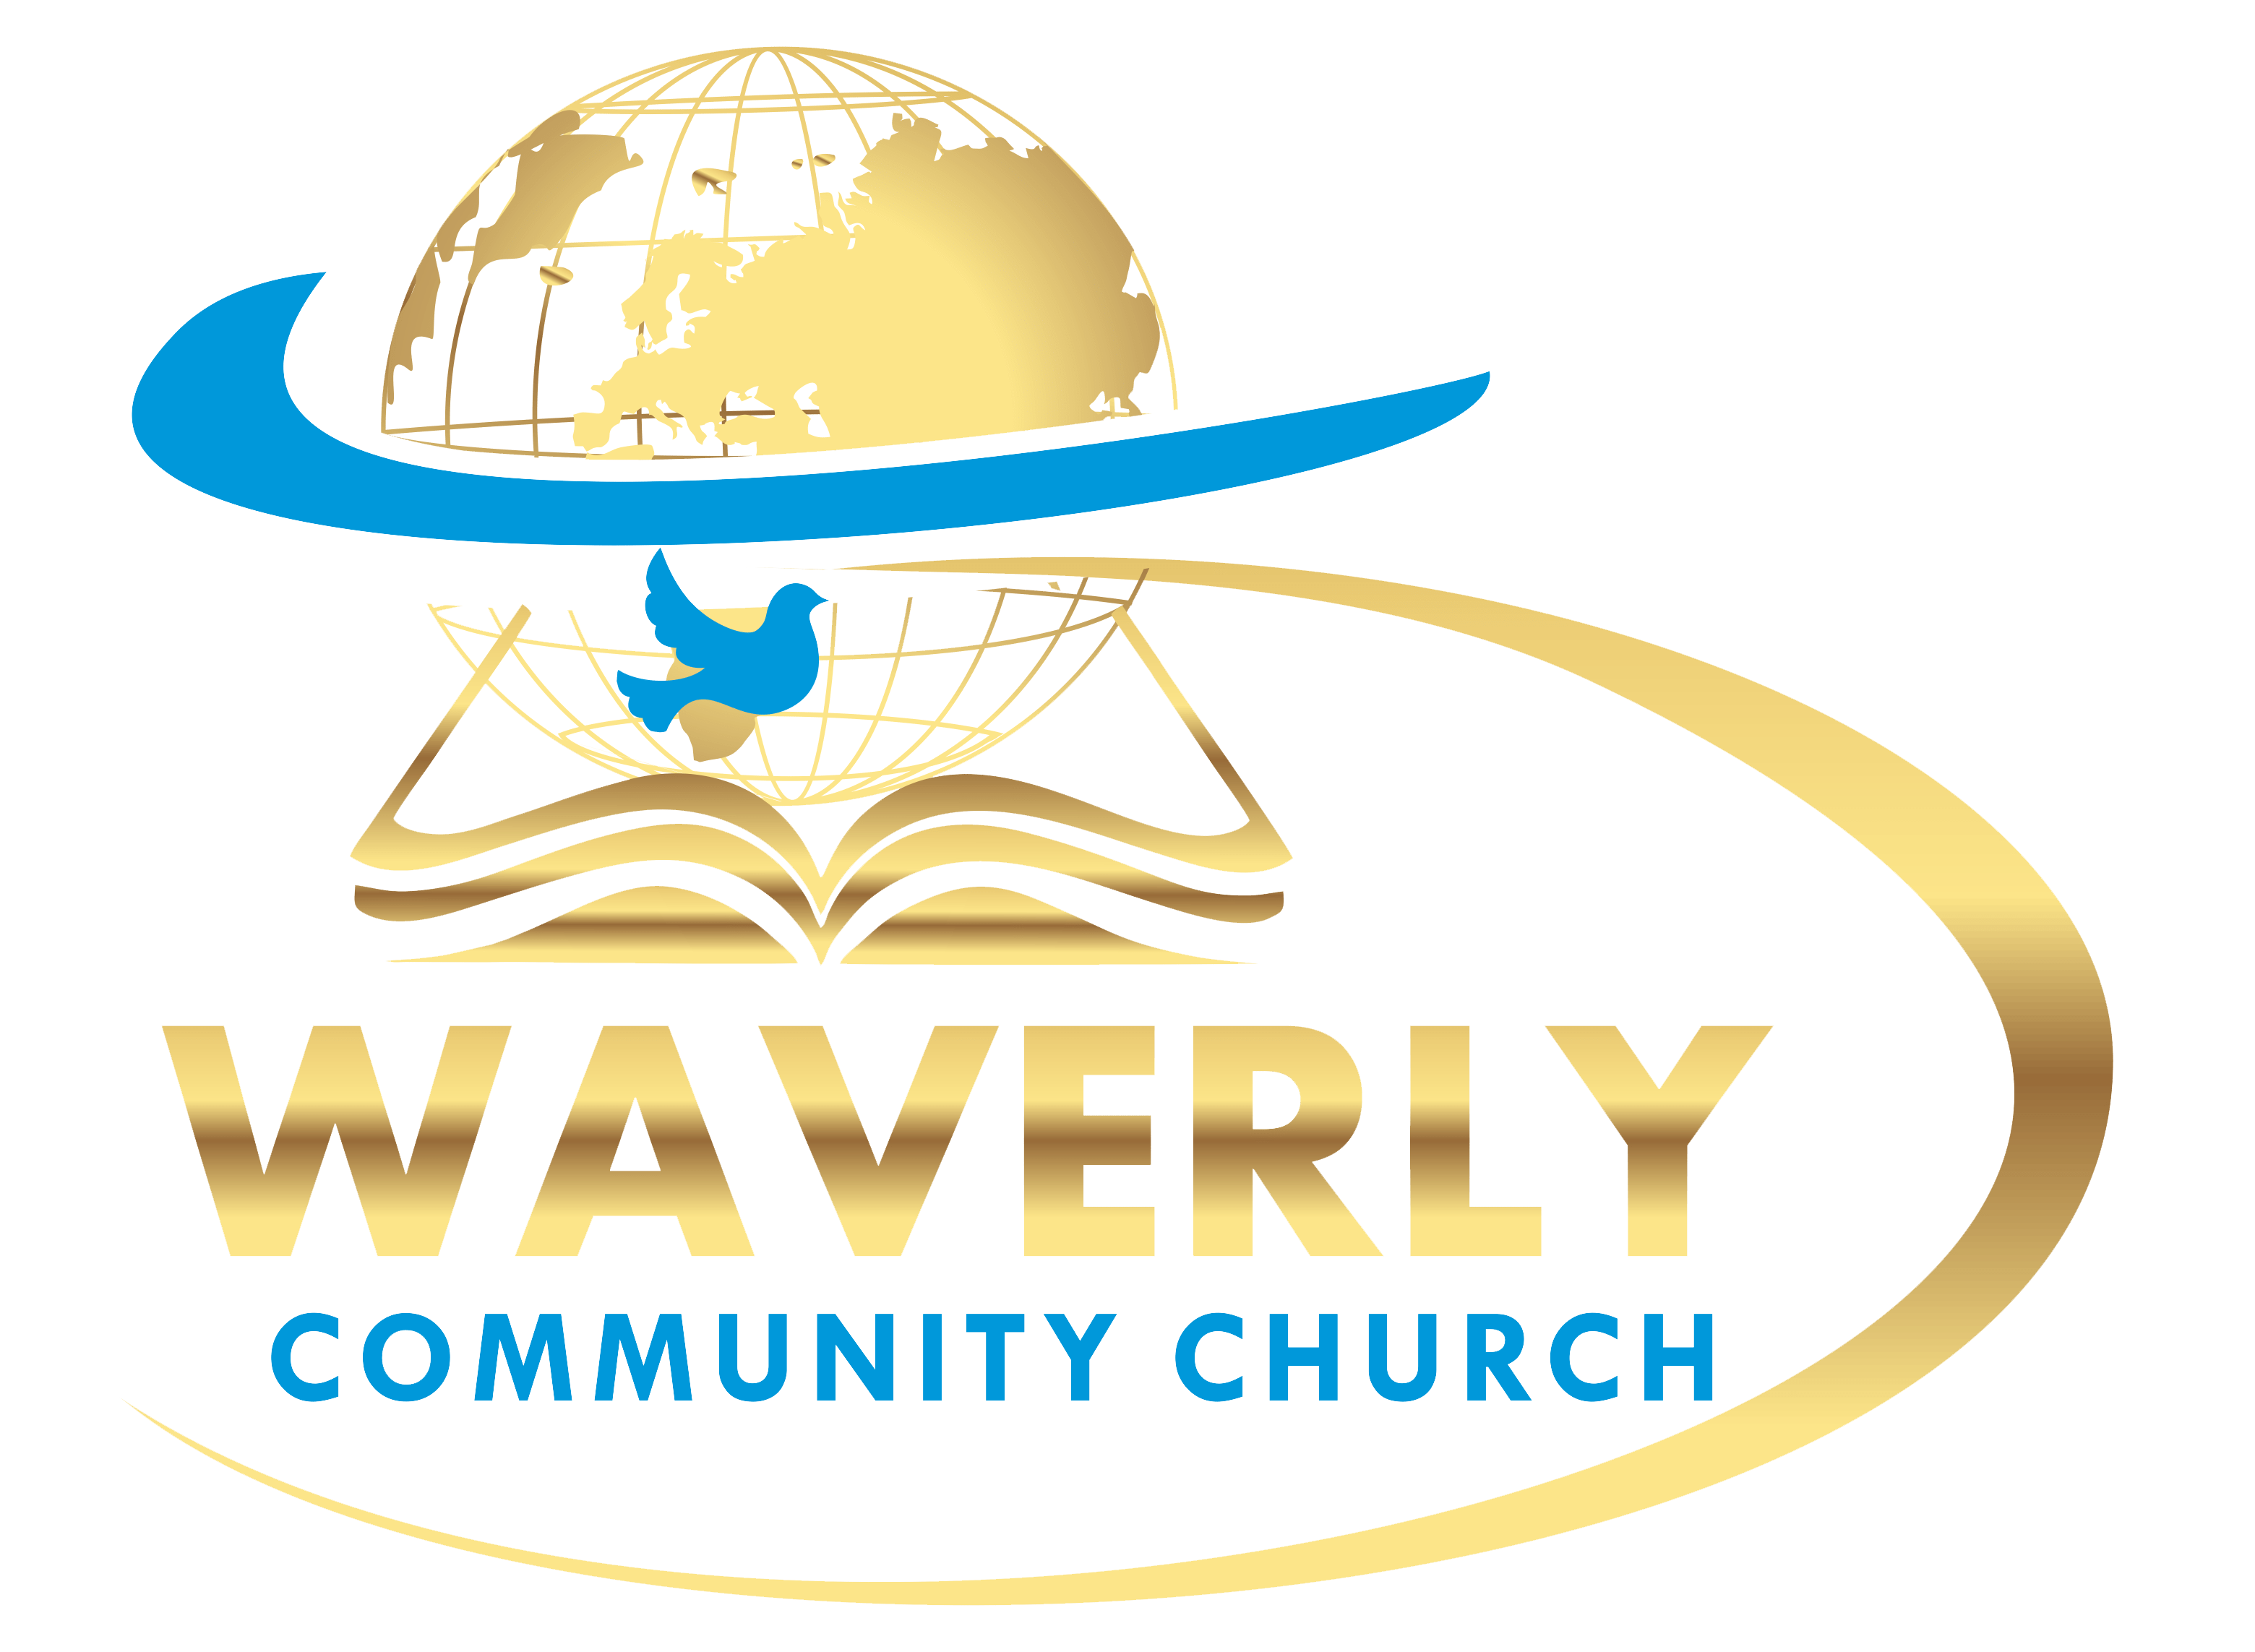 Waverly Community Church